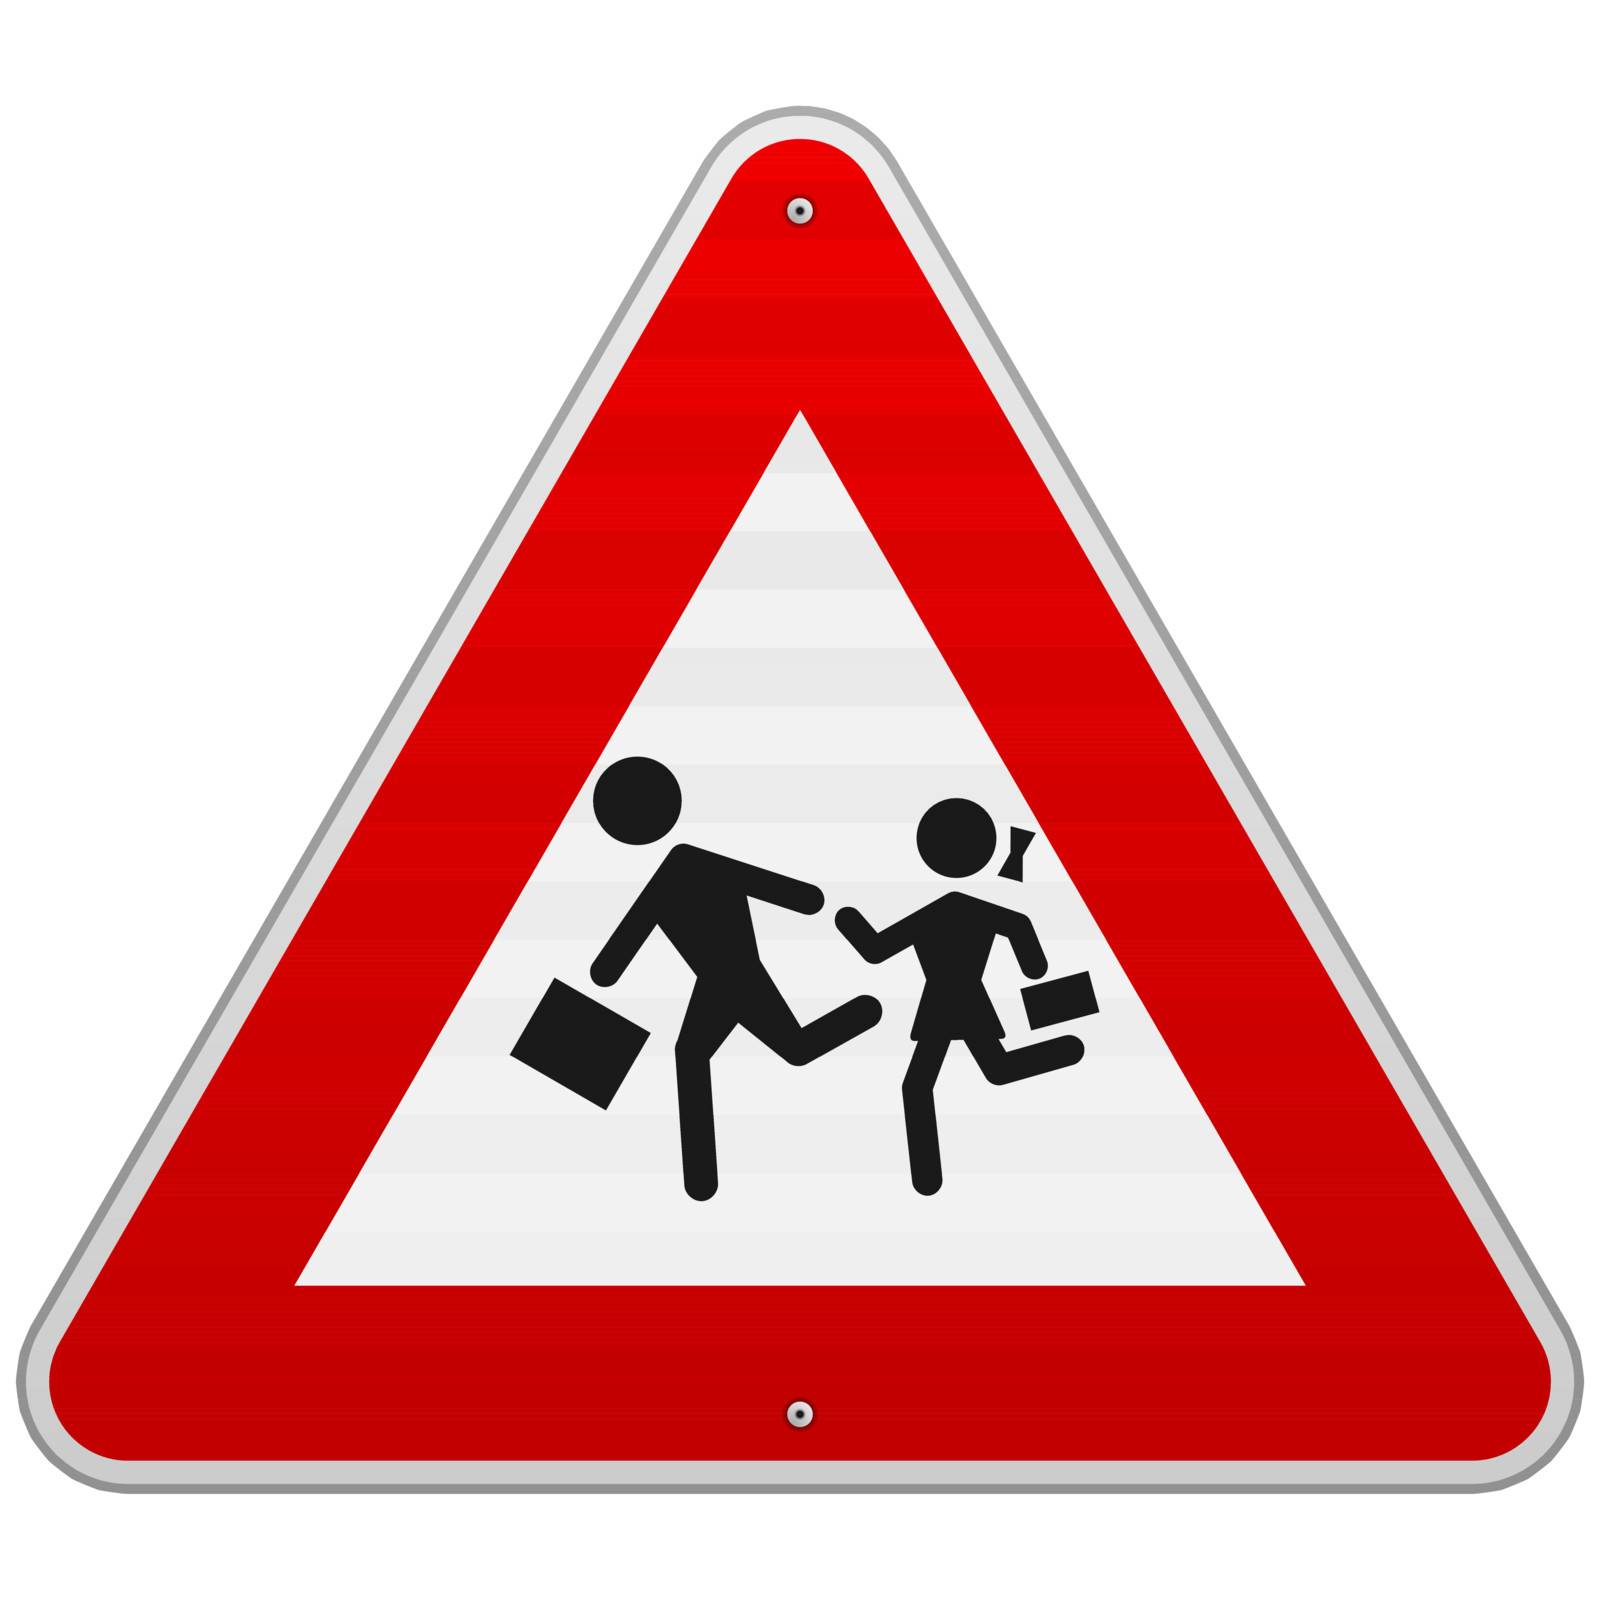 Pedestrian Danger Sign by zager